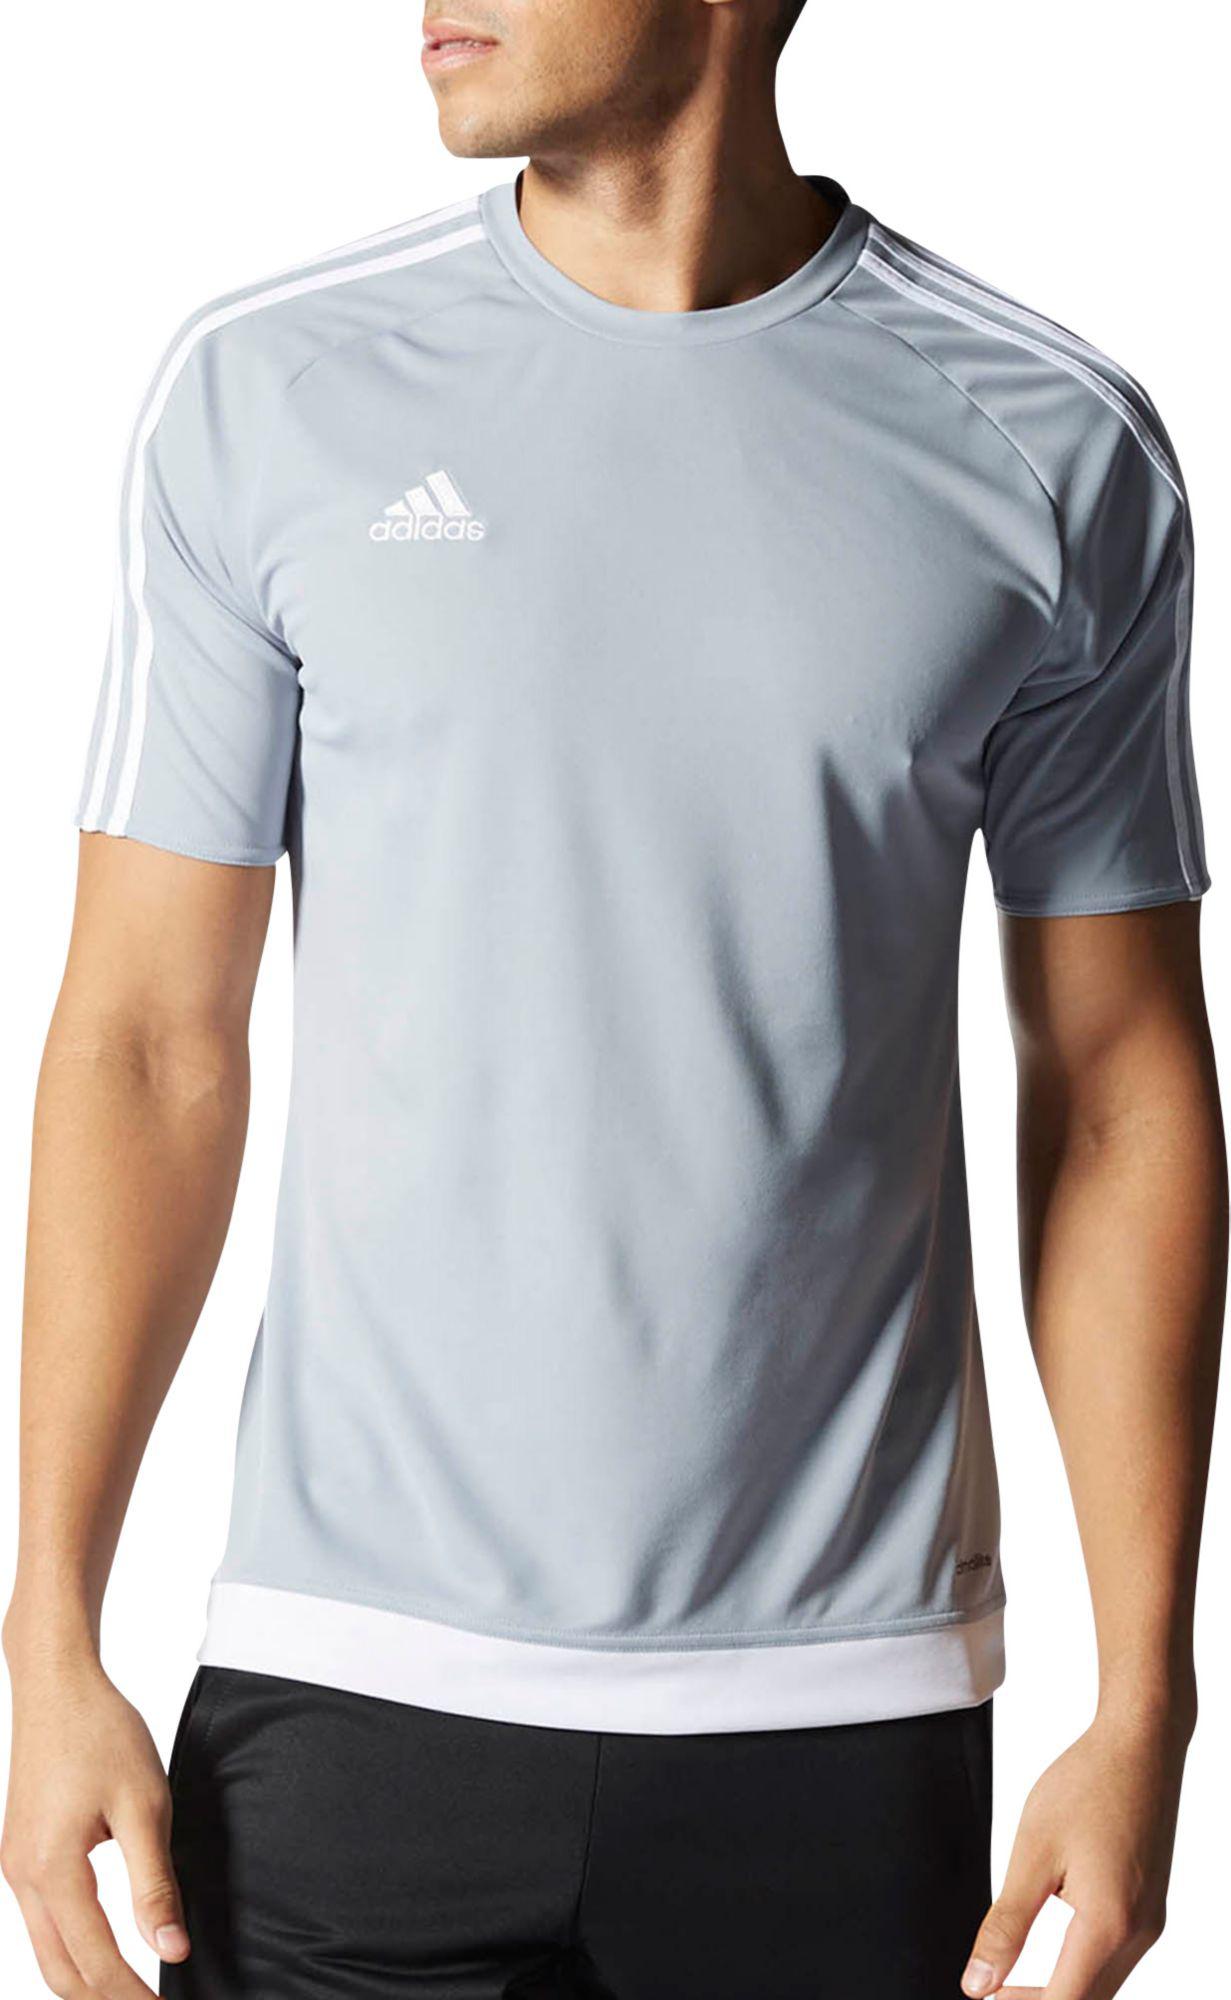 adidas men's estro 15 soccer jersey